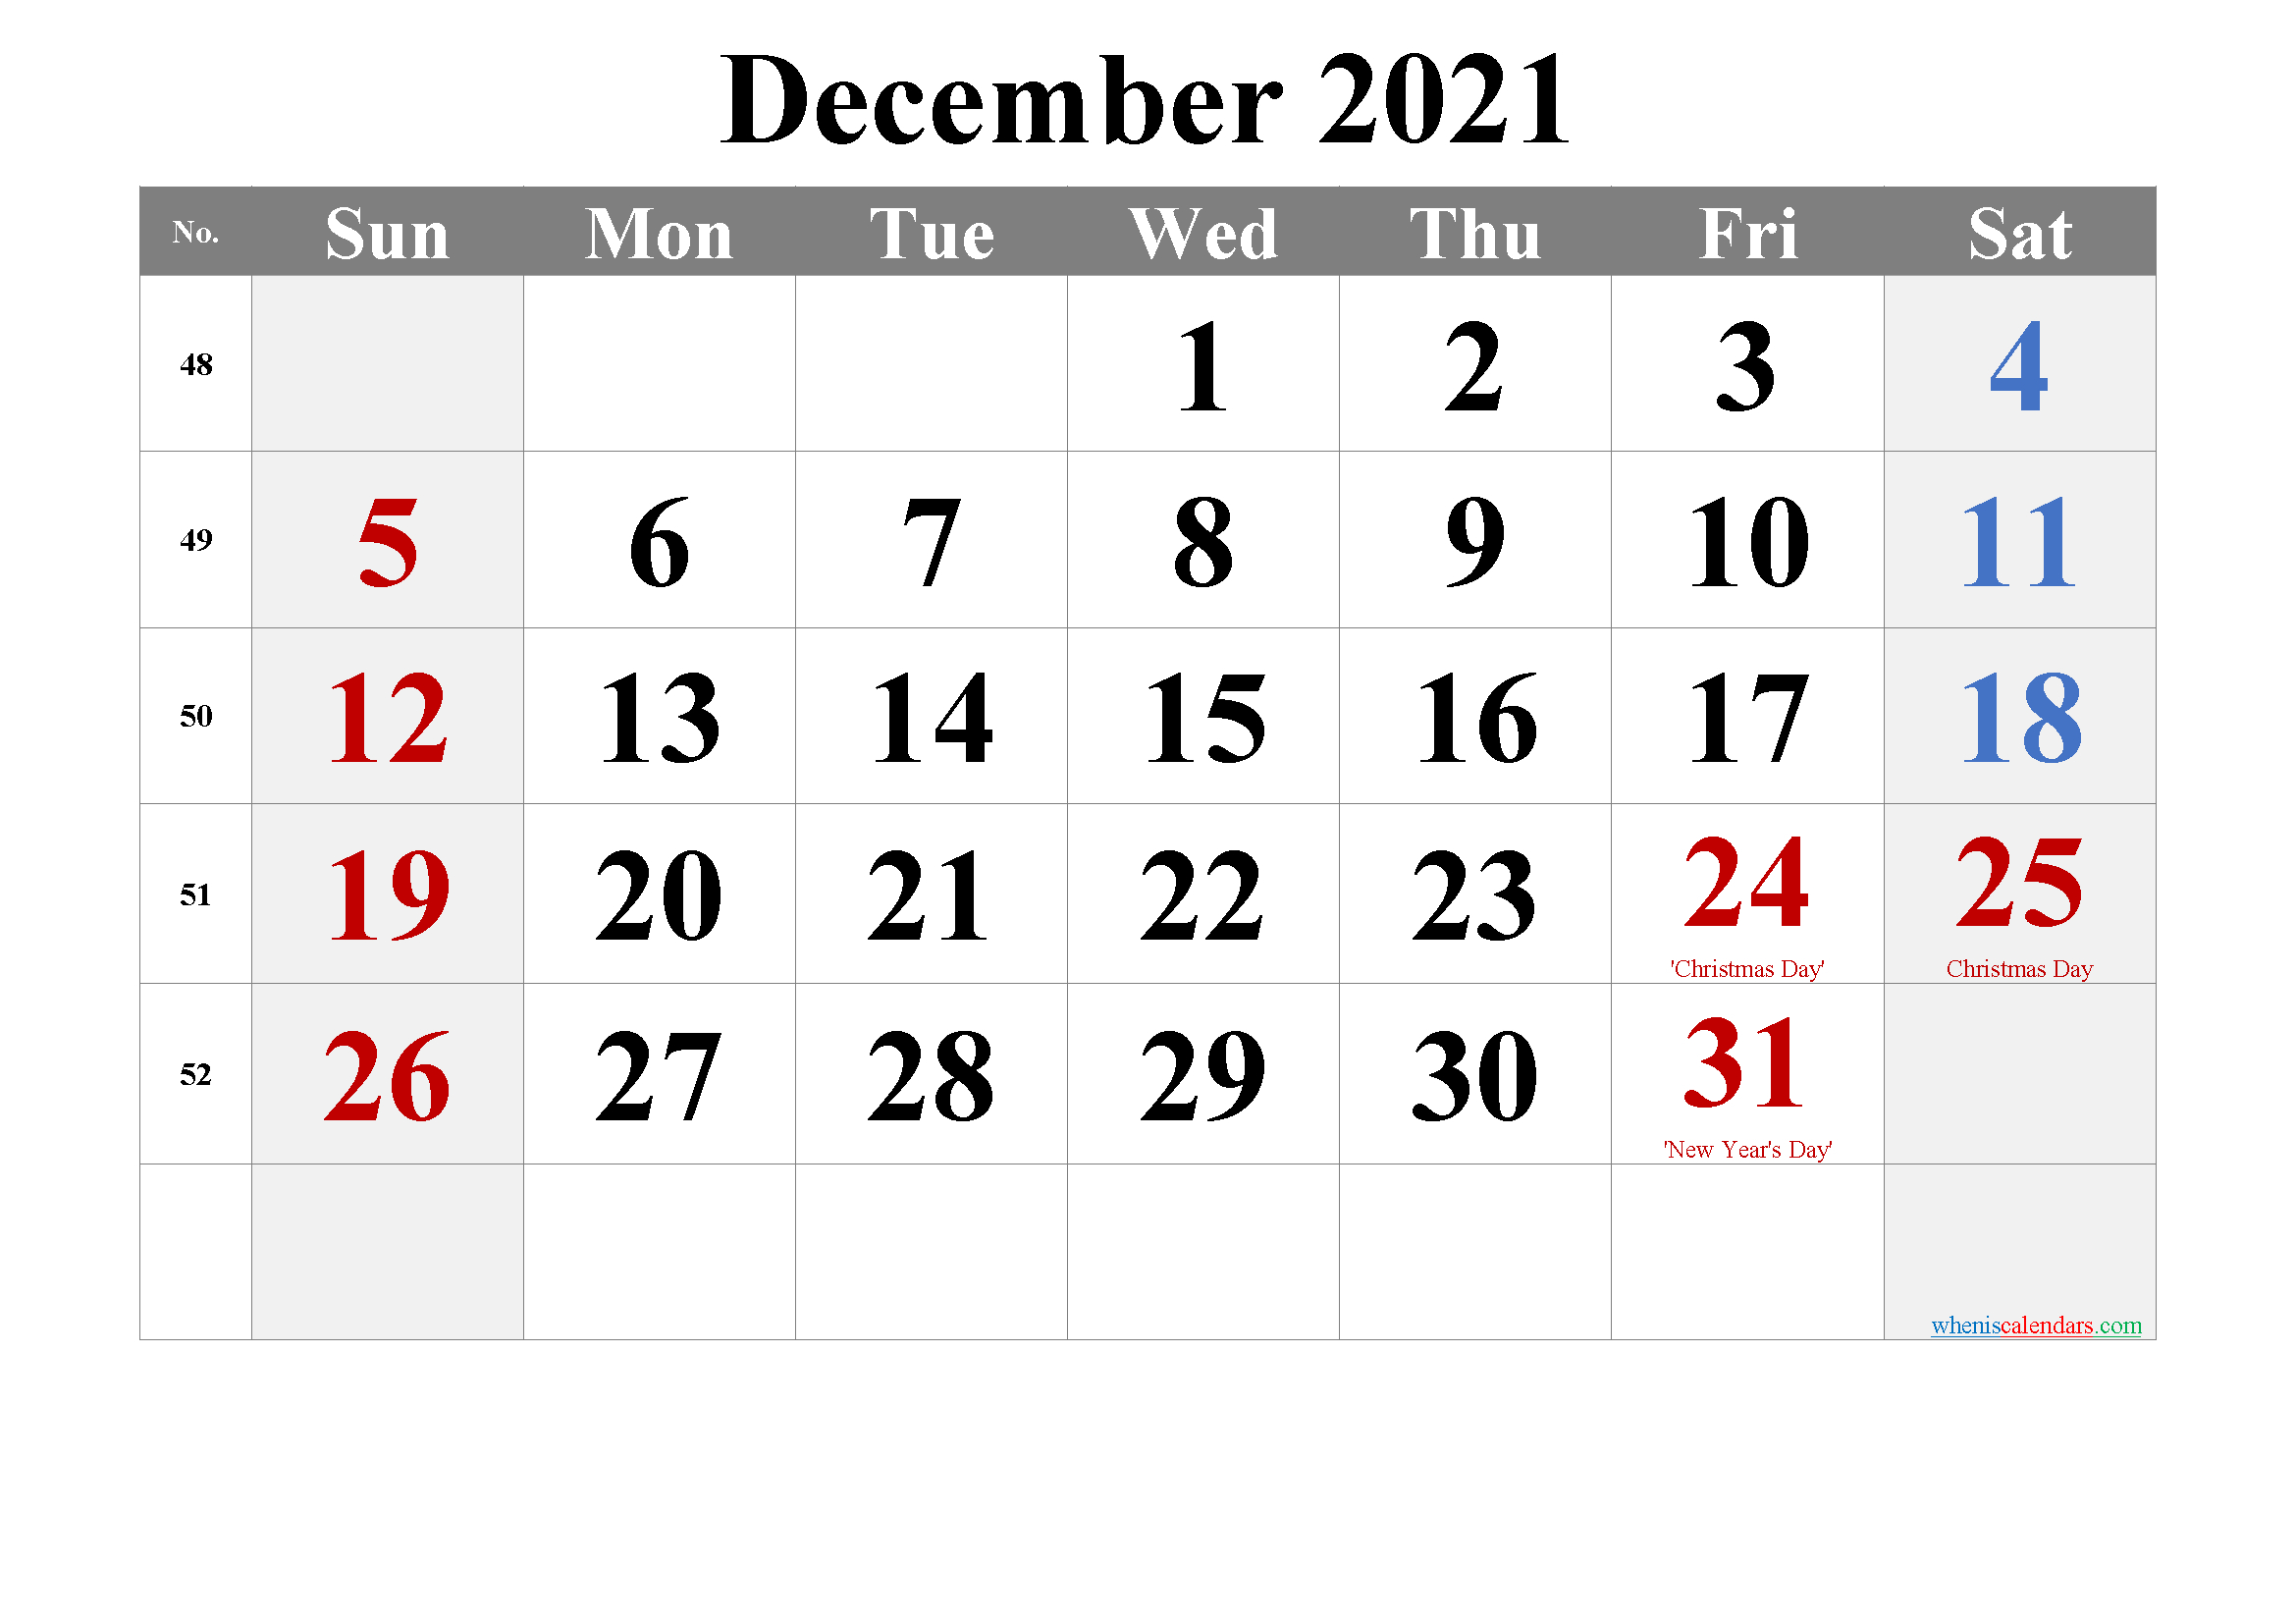 December 2021 Printable Calendar With Holidays - 6 Templates December 2021 Day Calendar